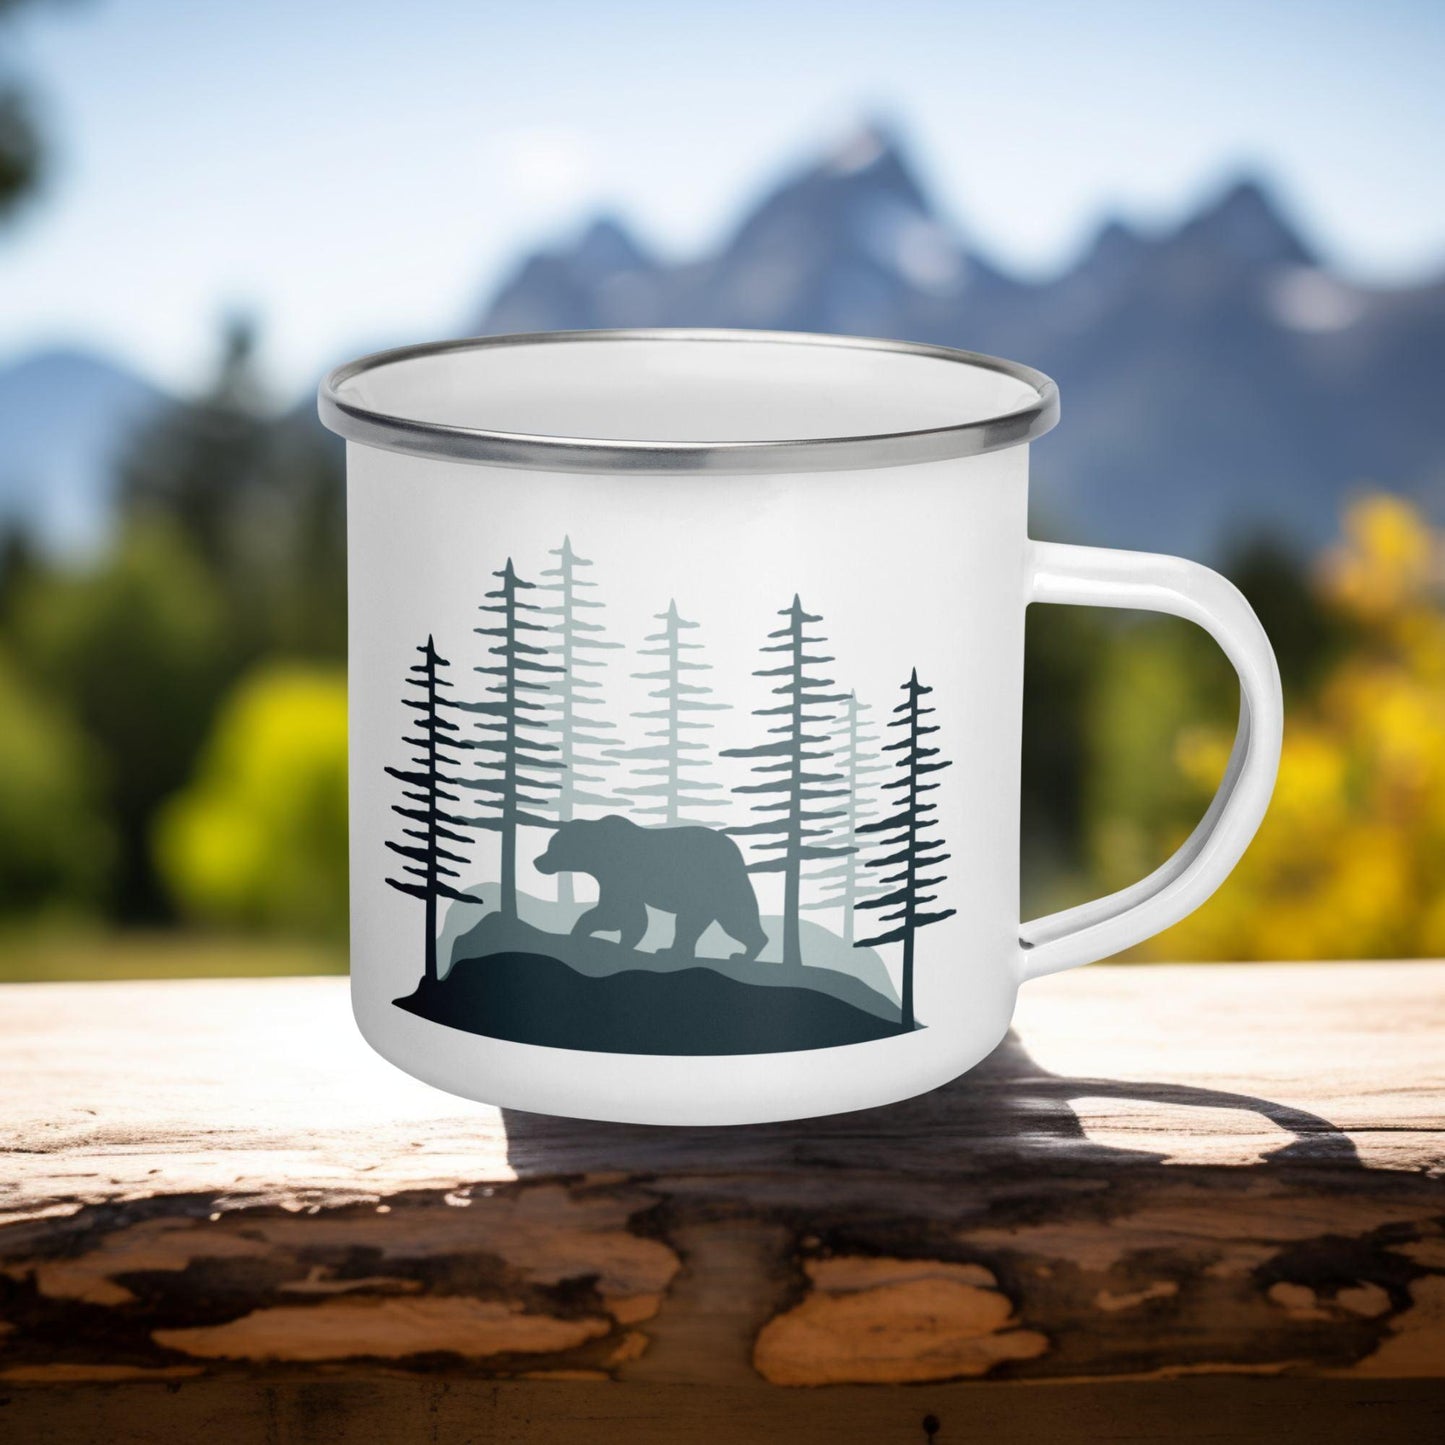 Grand Teton National Park Enamel Mug - Adventure Threads Company